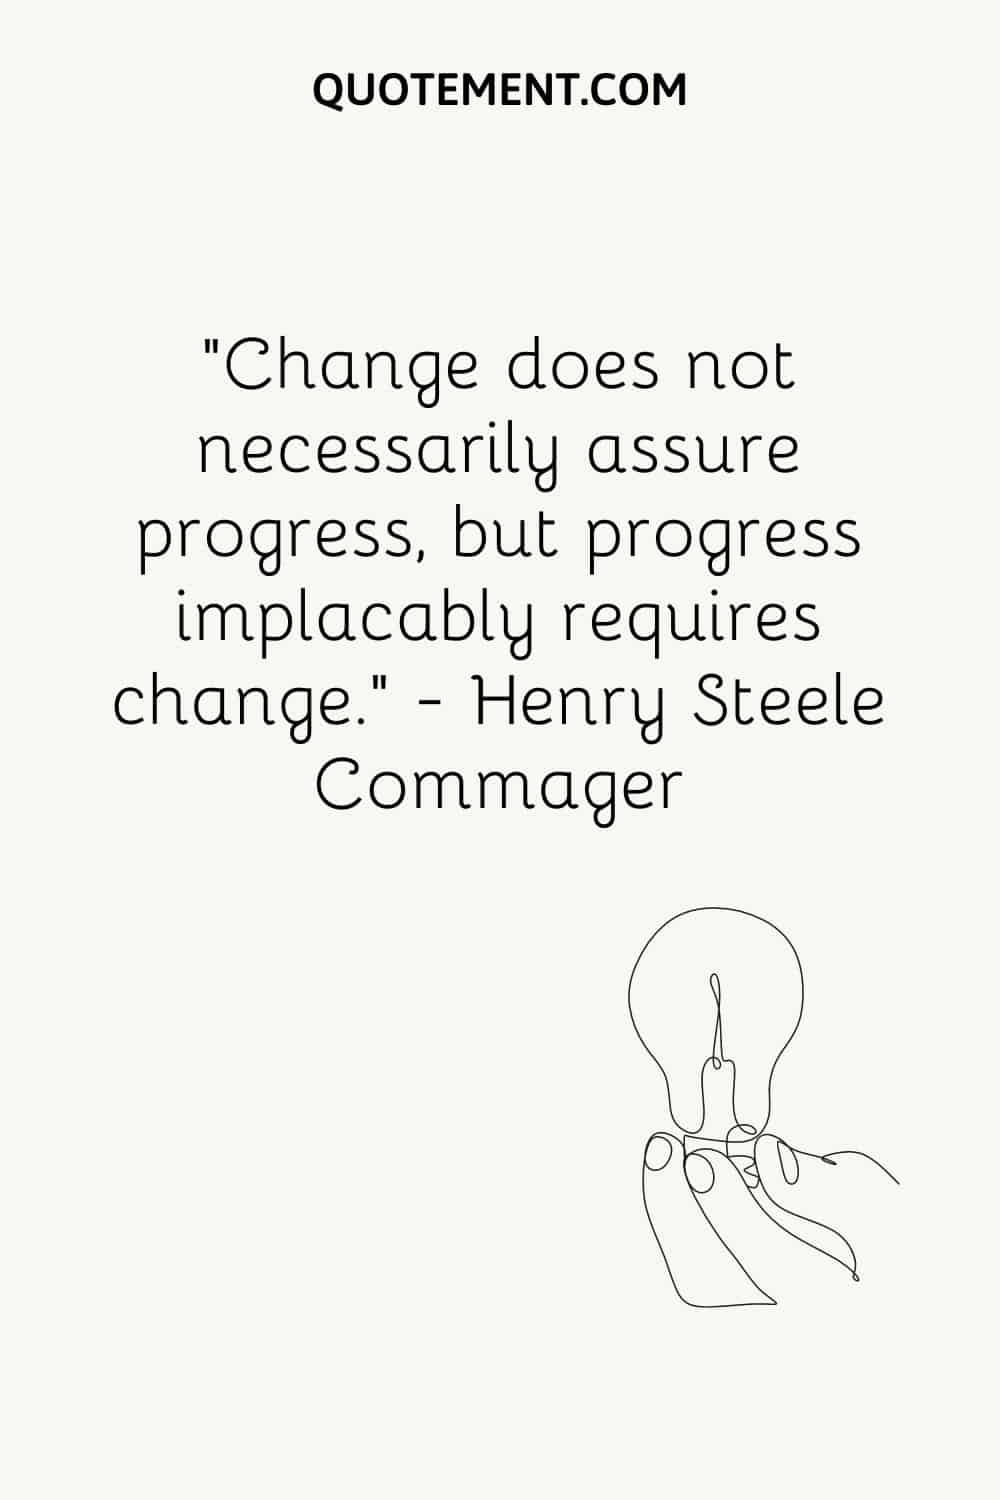 Change does not necessarily assure progress